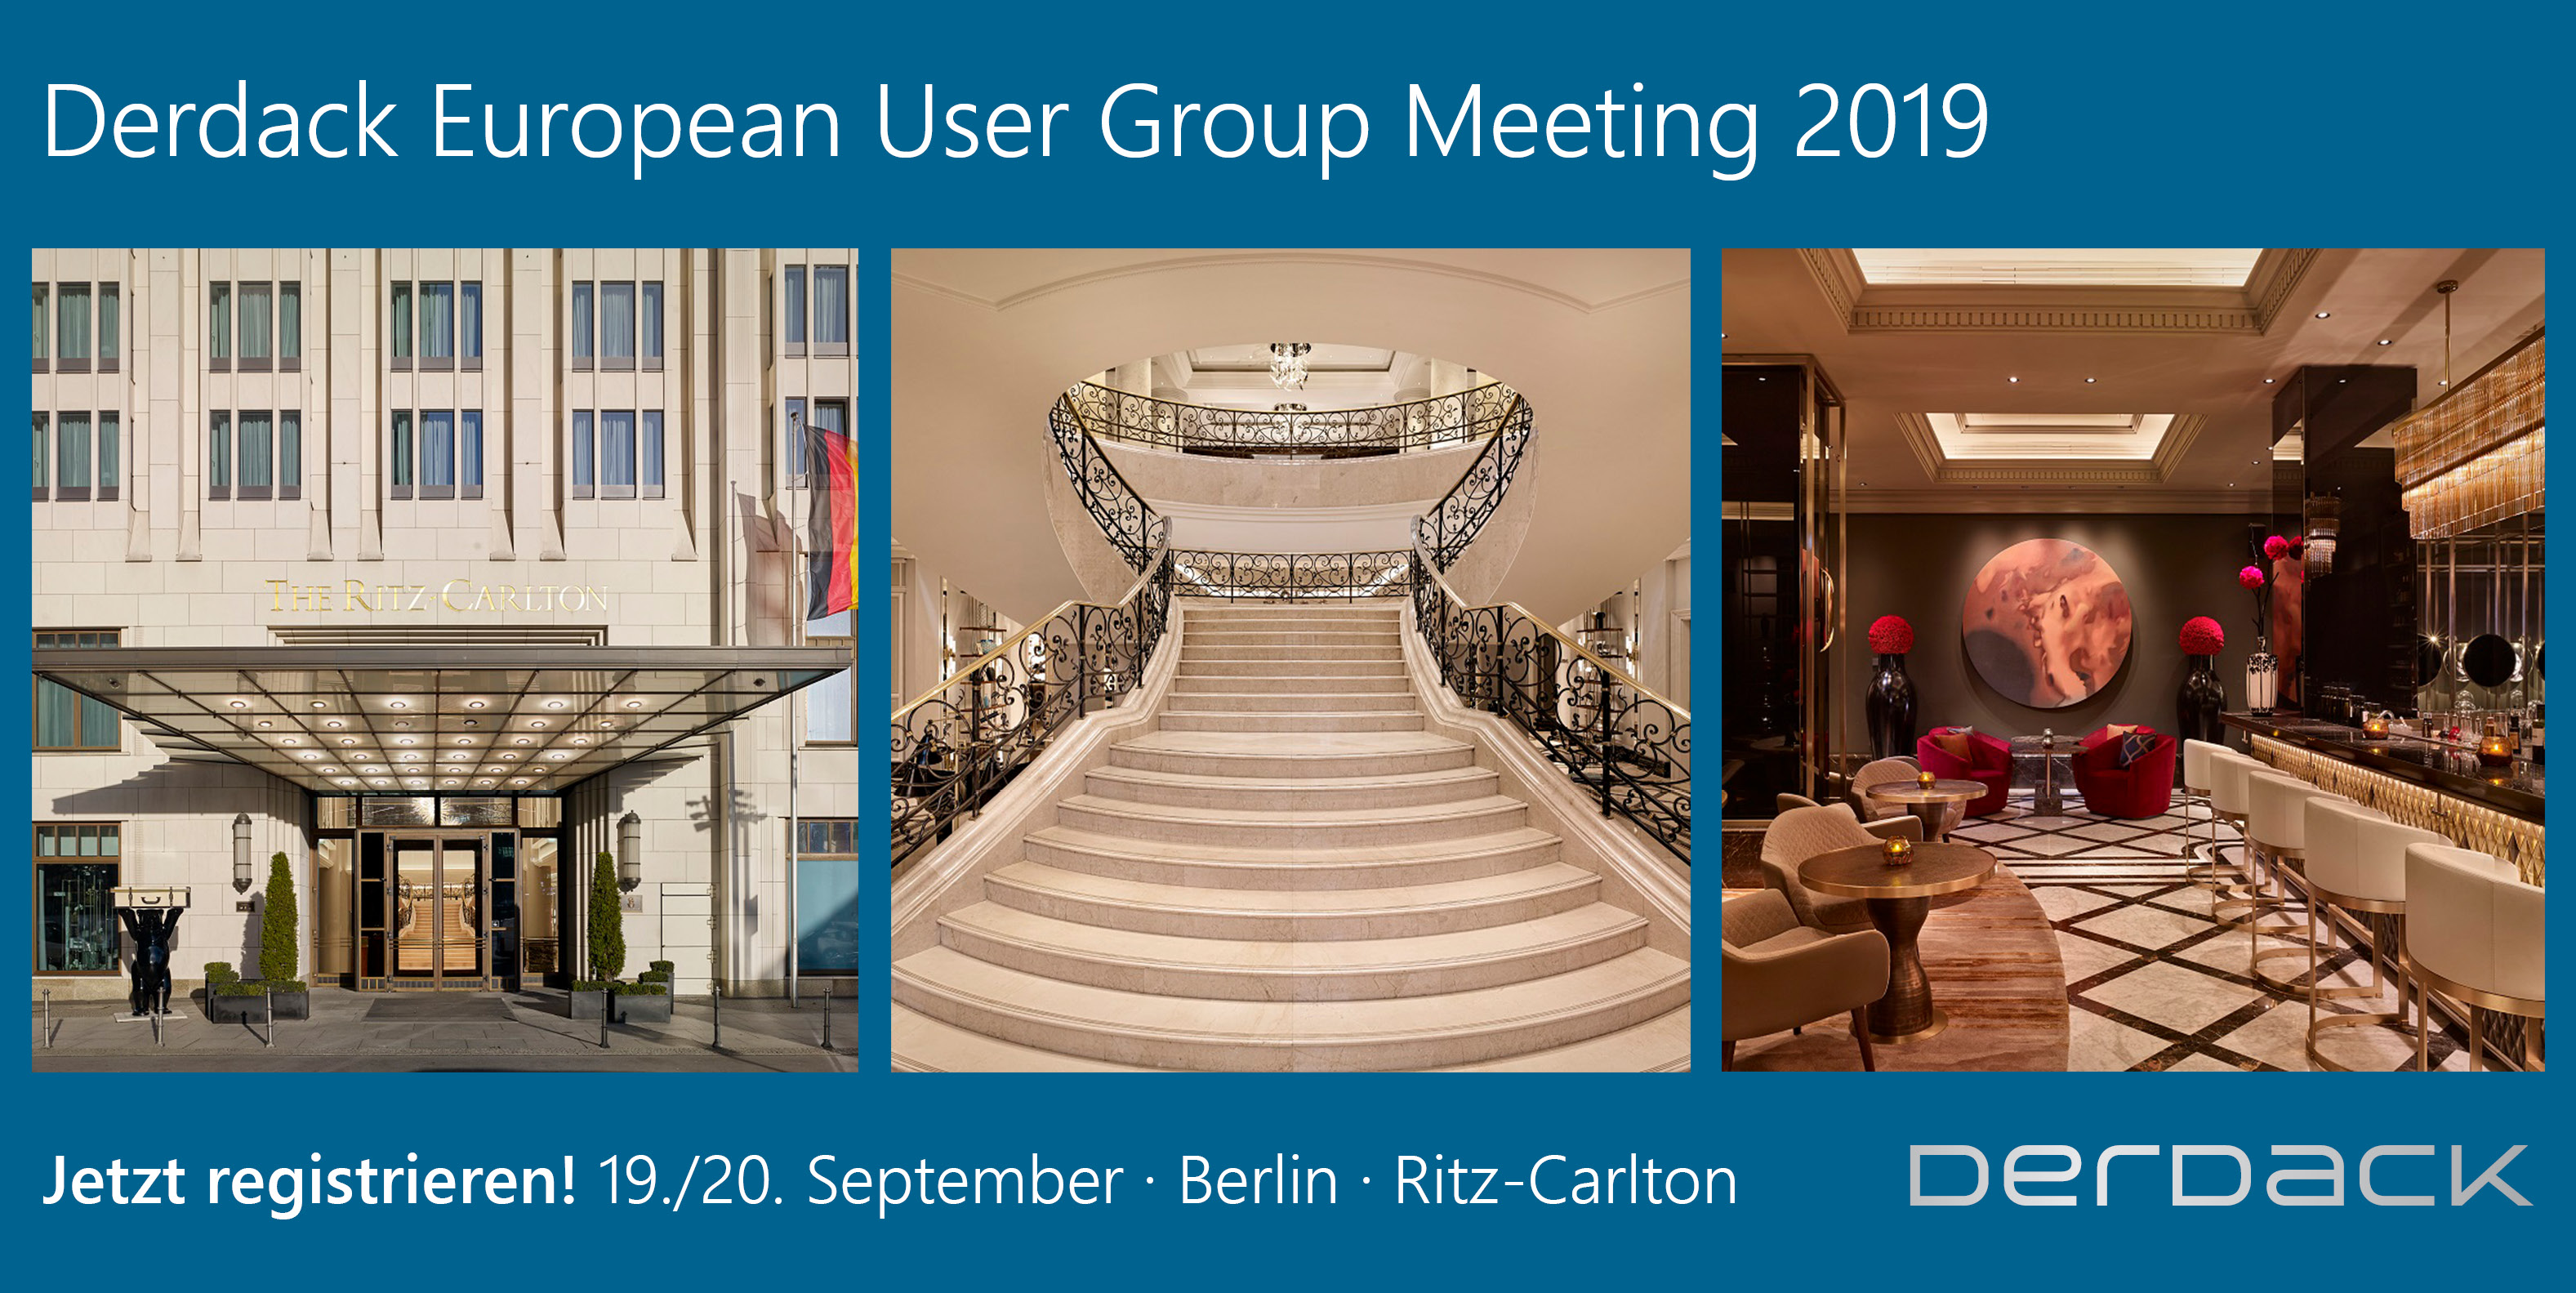 Derdack European User Group Meeting 2019 (DEUGM)